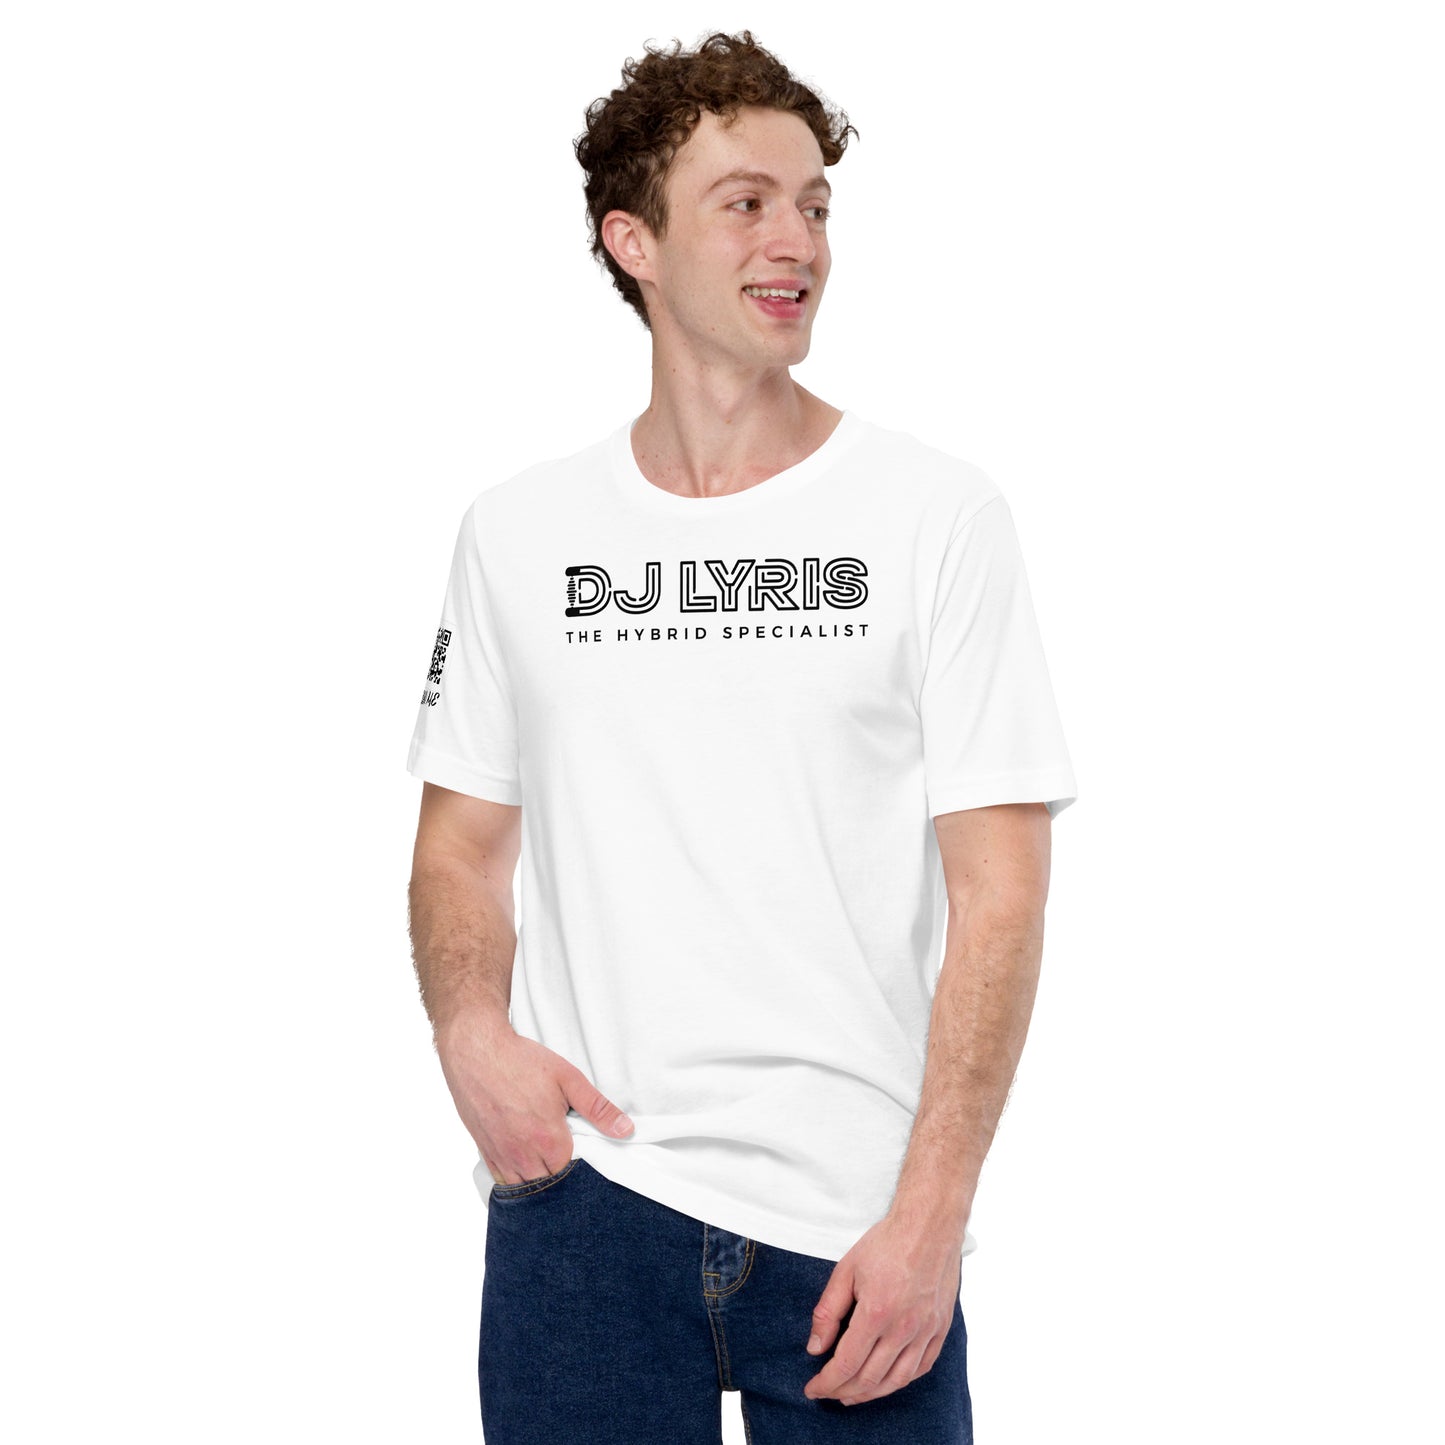 DJ Lyris "The Hybrid Specialist" T-Shirt